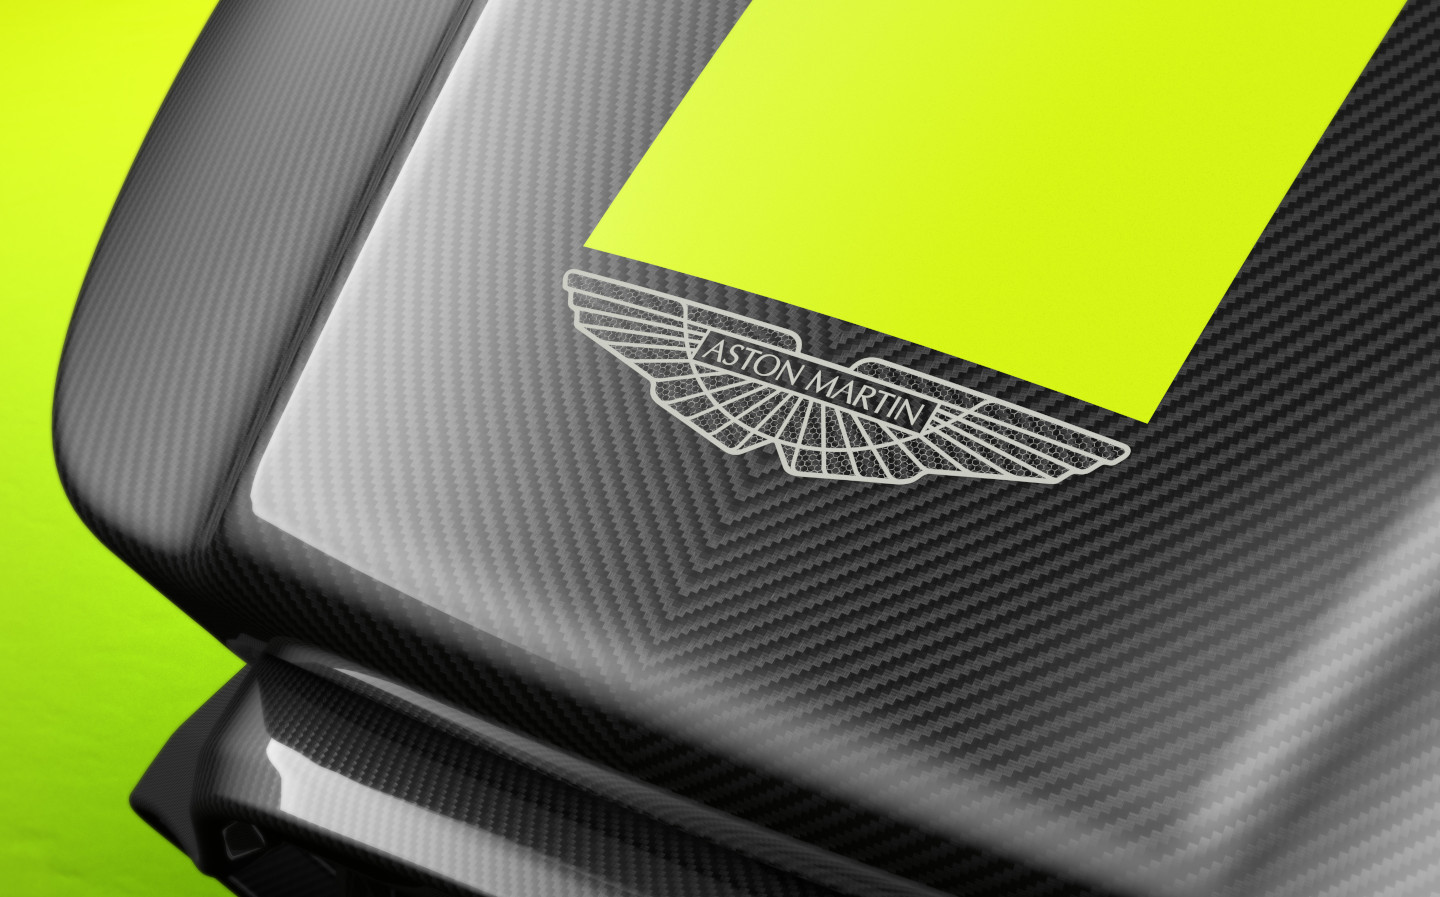 Aston Martin reveals £57,000 racing simulator